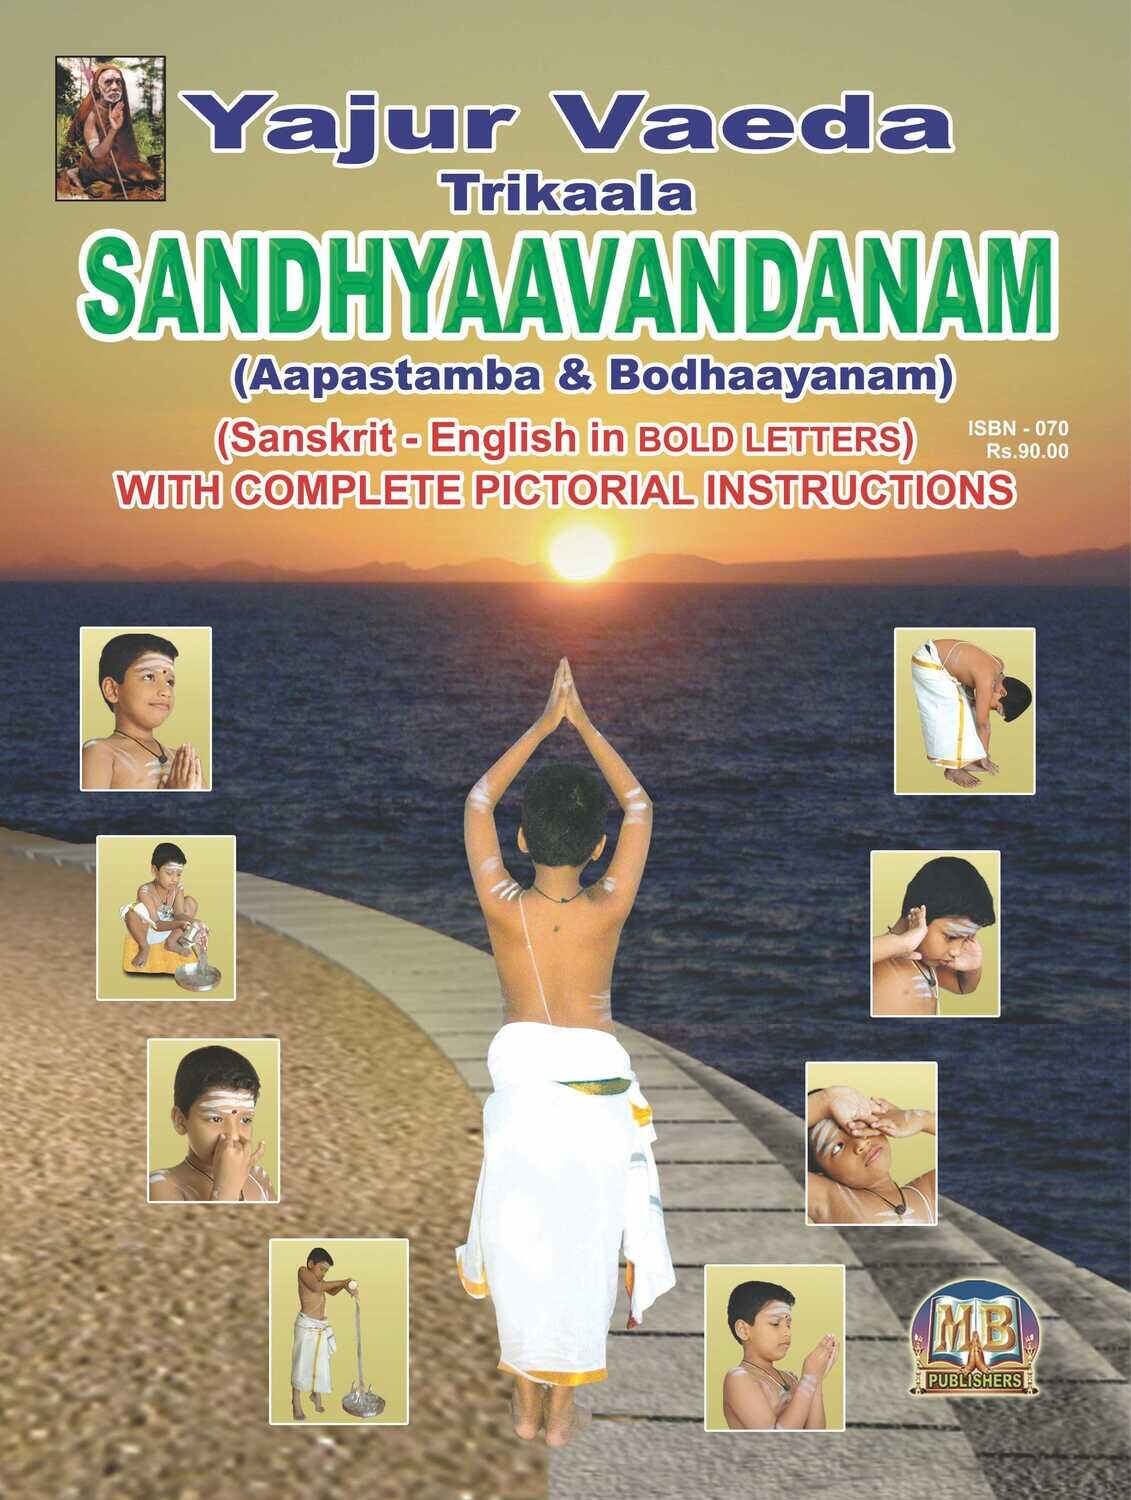 Yajur Vaeda Sandhyaavandanam (Sanskrit-English with pictorial instructions)